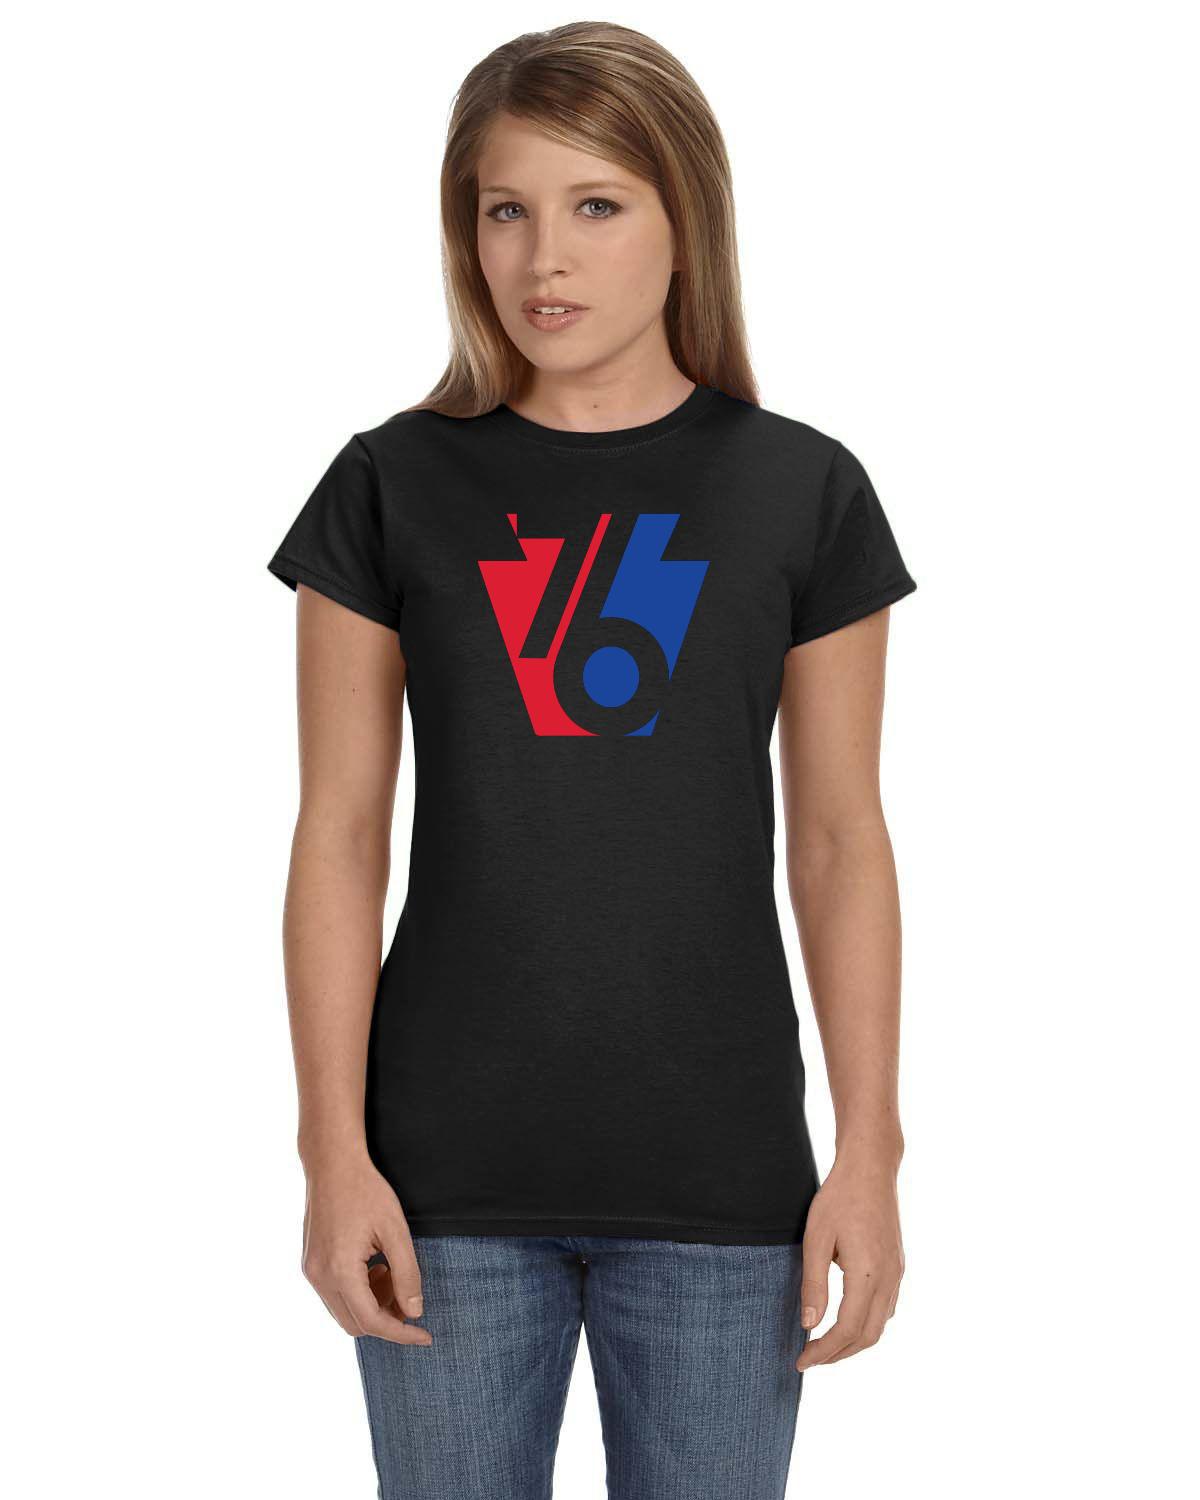 Keystone 76 Ladies Tee (Gildan Ladies' Softstyle 7.5 oz./lin. yd. Fitted T-Shirt | G640L)